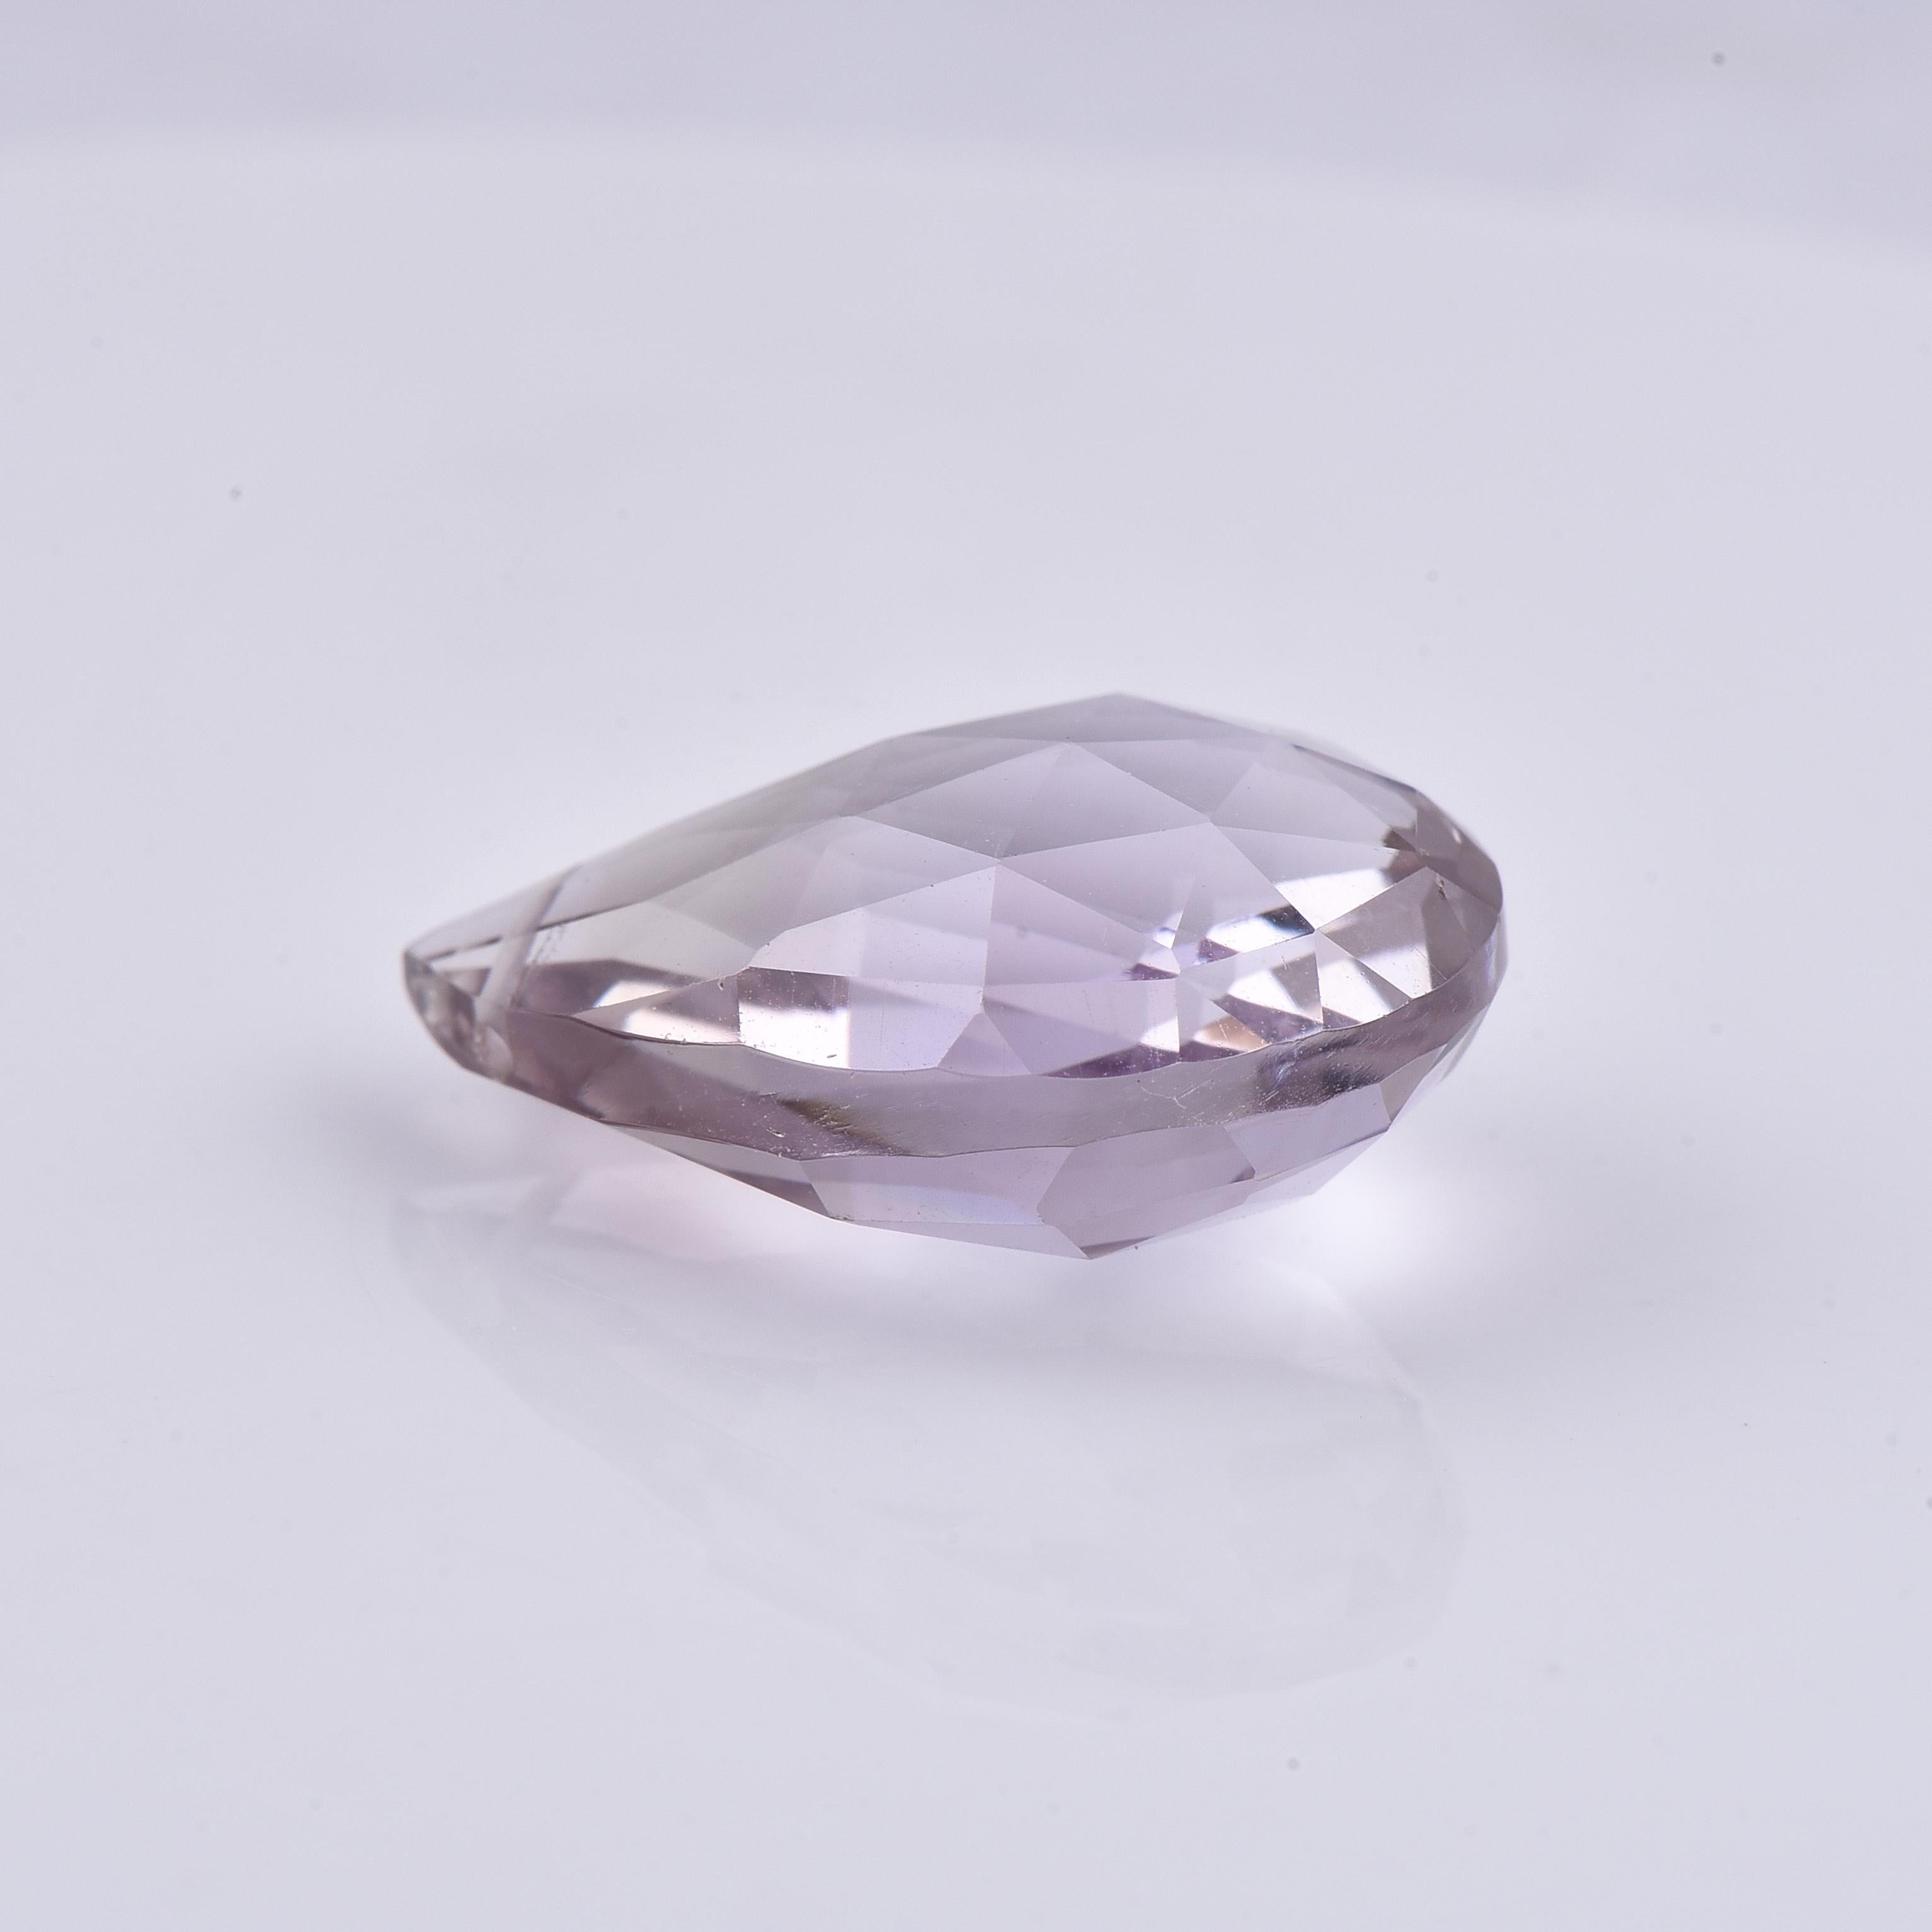 Stone Information: Natural Amethyst
Shape/Cut: Pear Shape
Color: Reddish Purple/Purple
Dimensions (mm): 15.00 x 8.05 x 5.90
Weight: 4.50ct